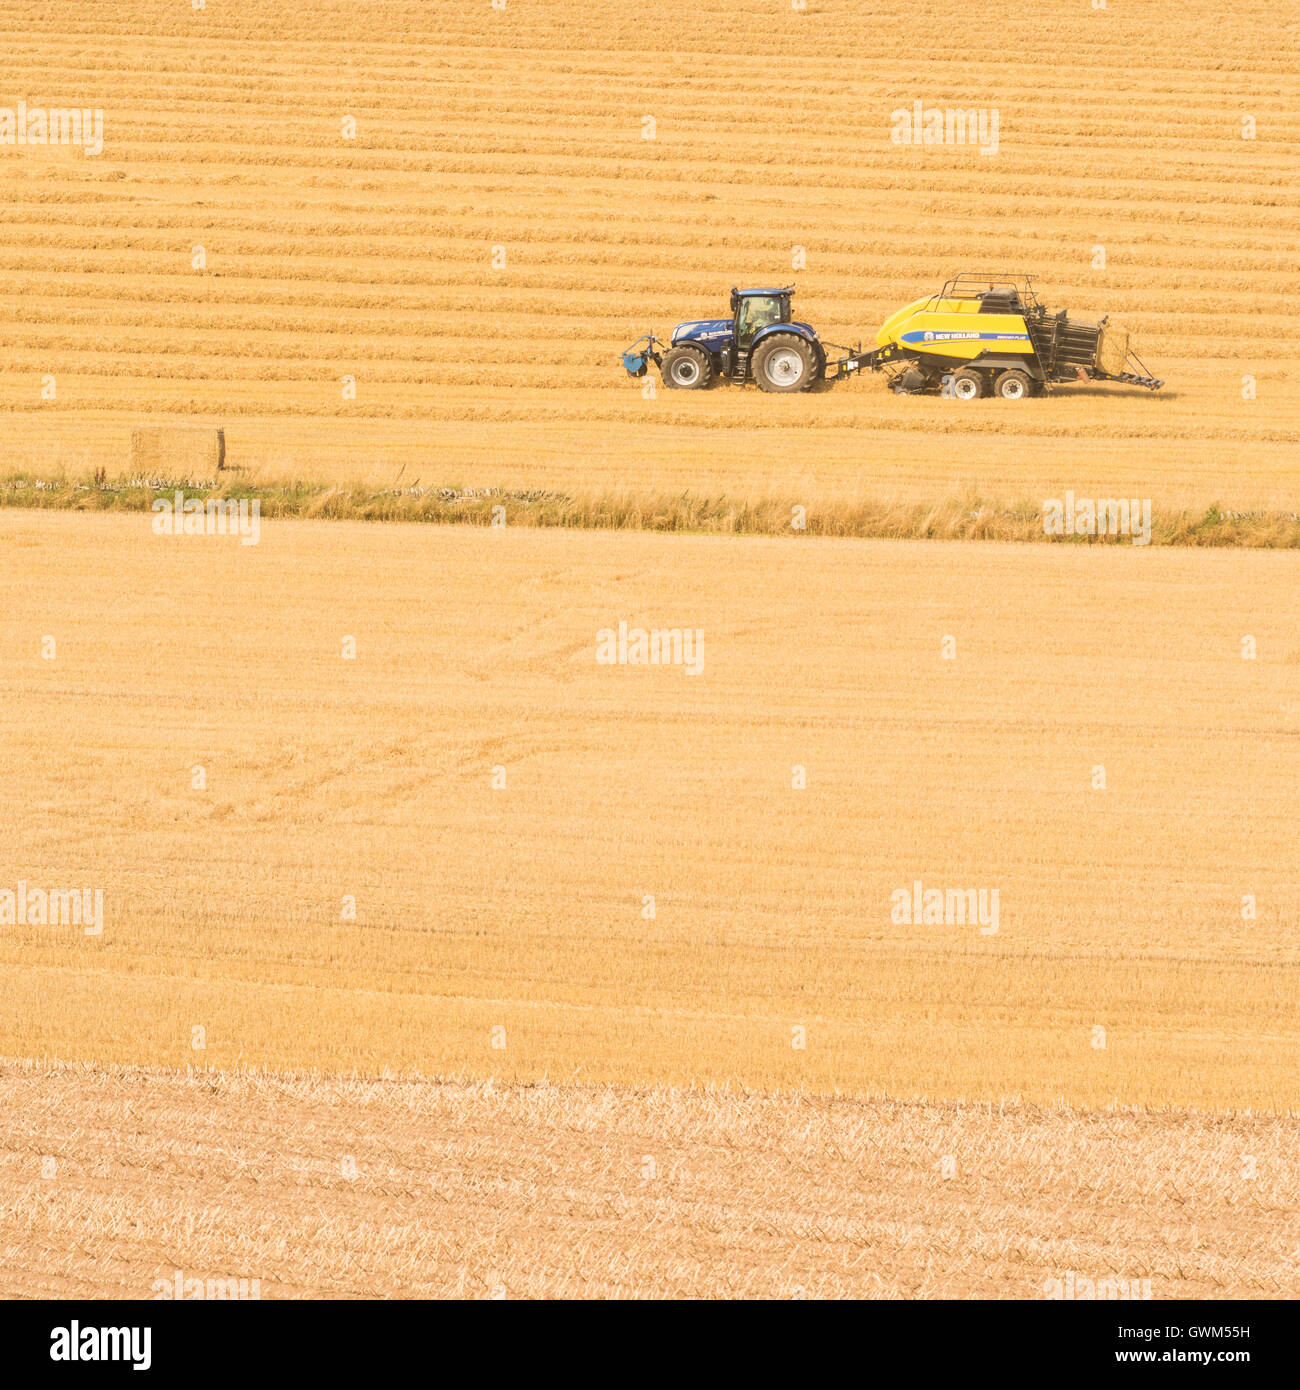 Modern farming in Scotland - tractor and baler making rectangular bales of straw Stock Photo